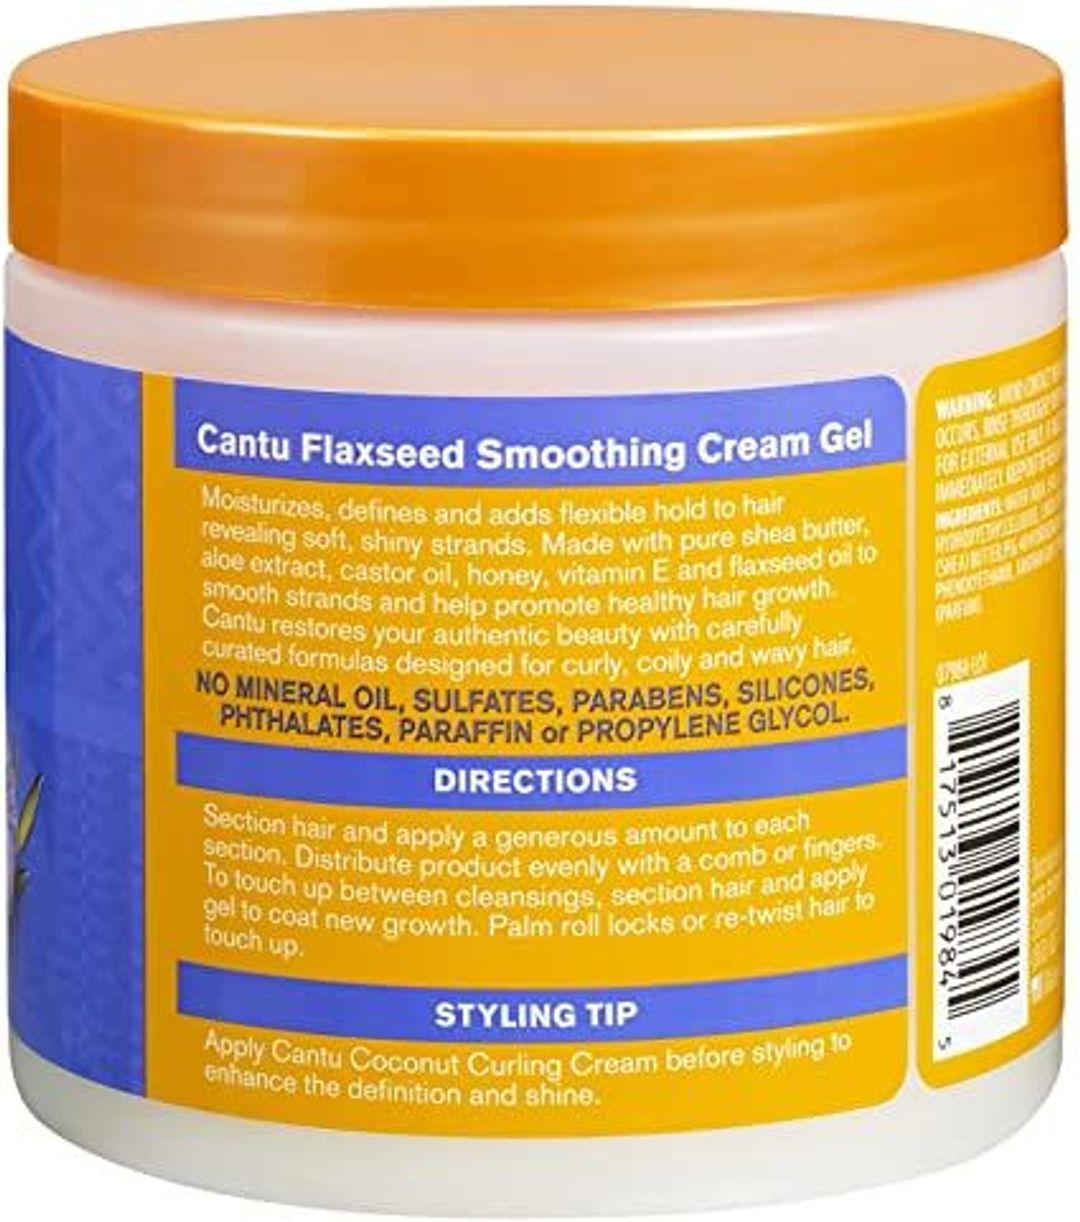 Cantu Flaxseed Smoothing Cream Gel - 453g